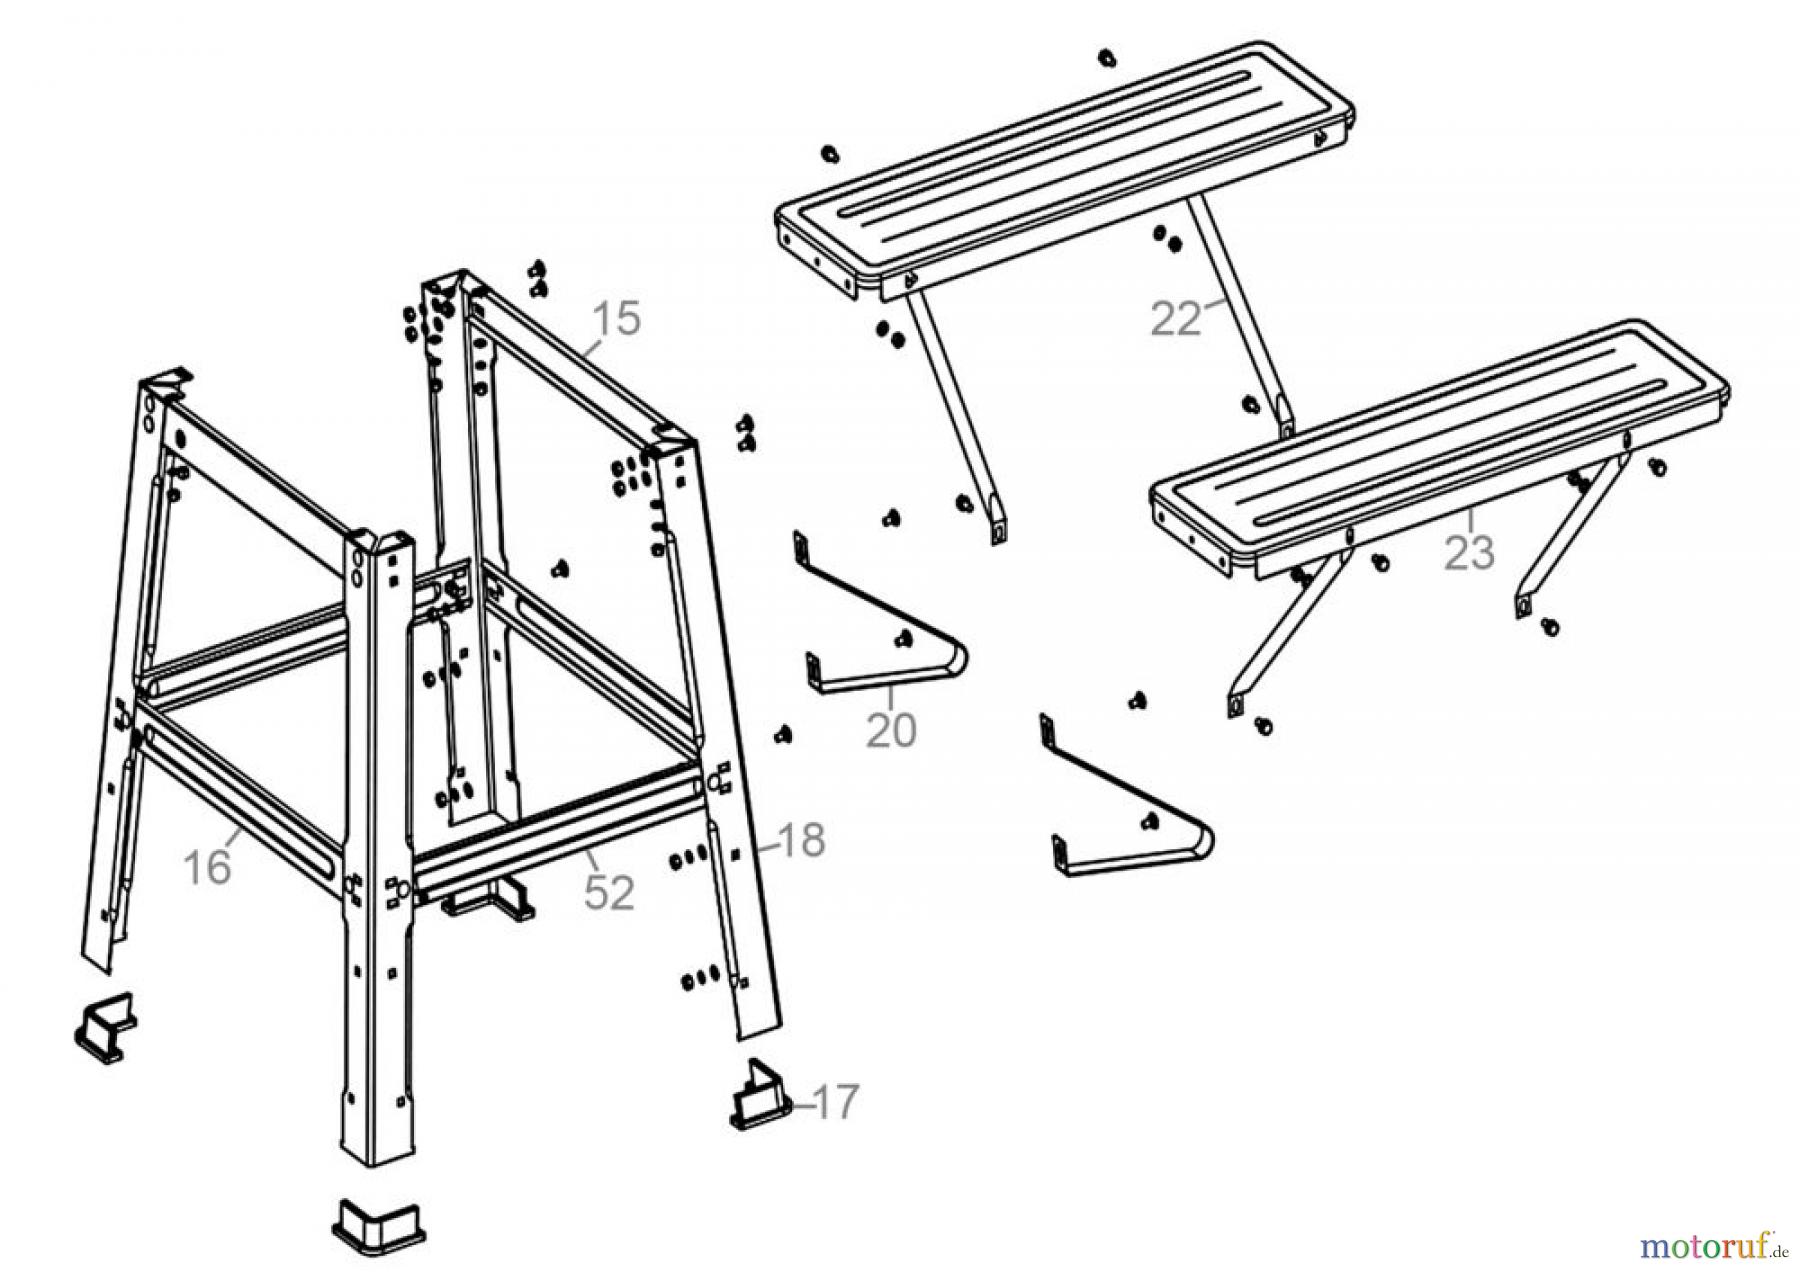  Güde Holzbearbeitung Tischkreissägen Tischkreissäge GTK 2000 A - 55605 Ersatzteileversion  FSL55605-01 Seite 2